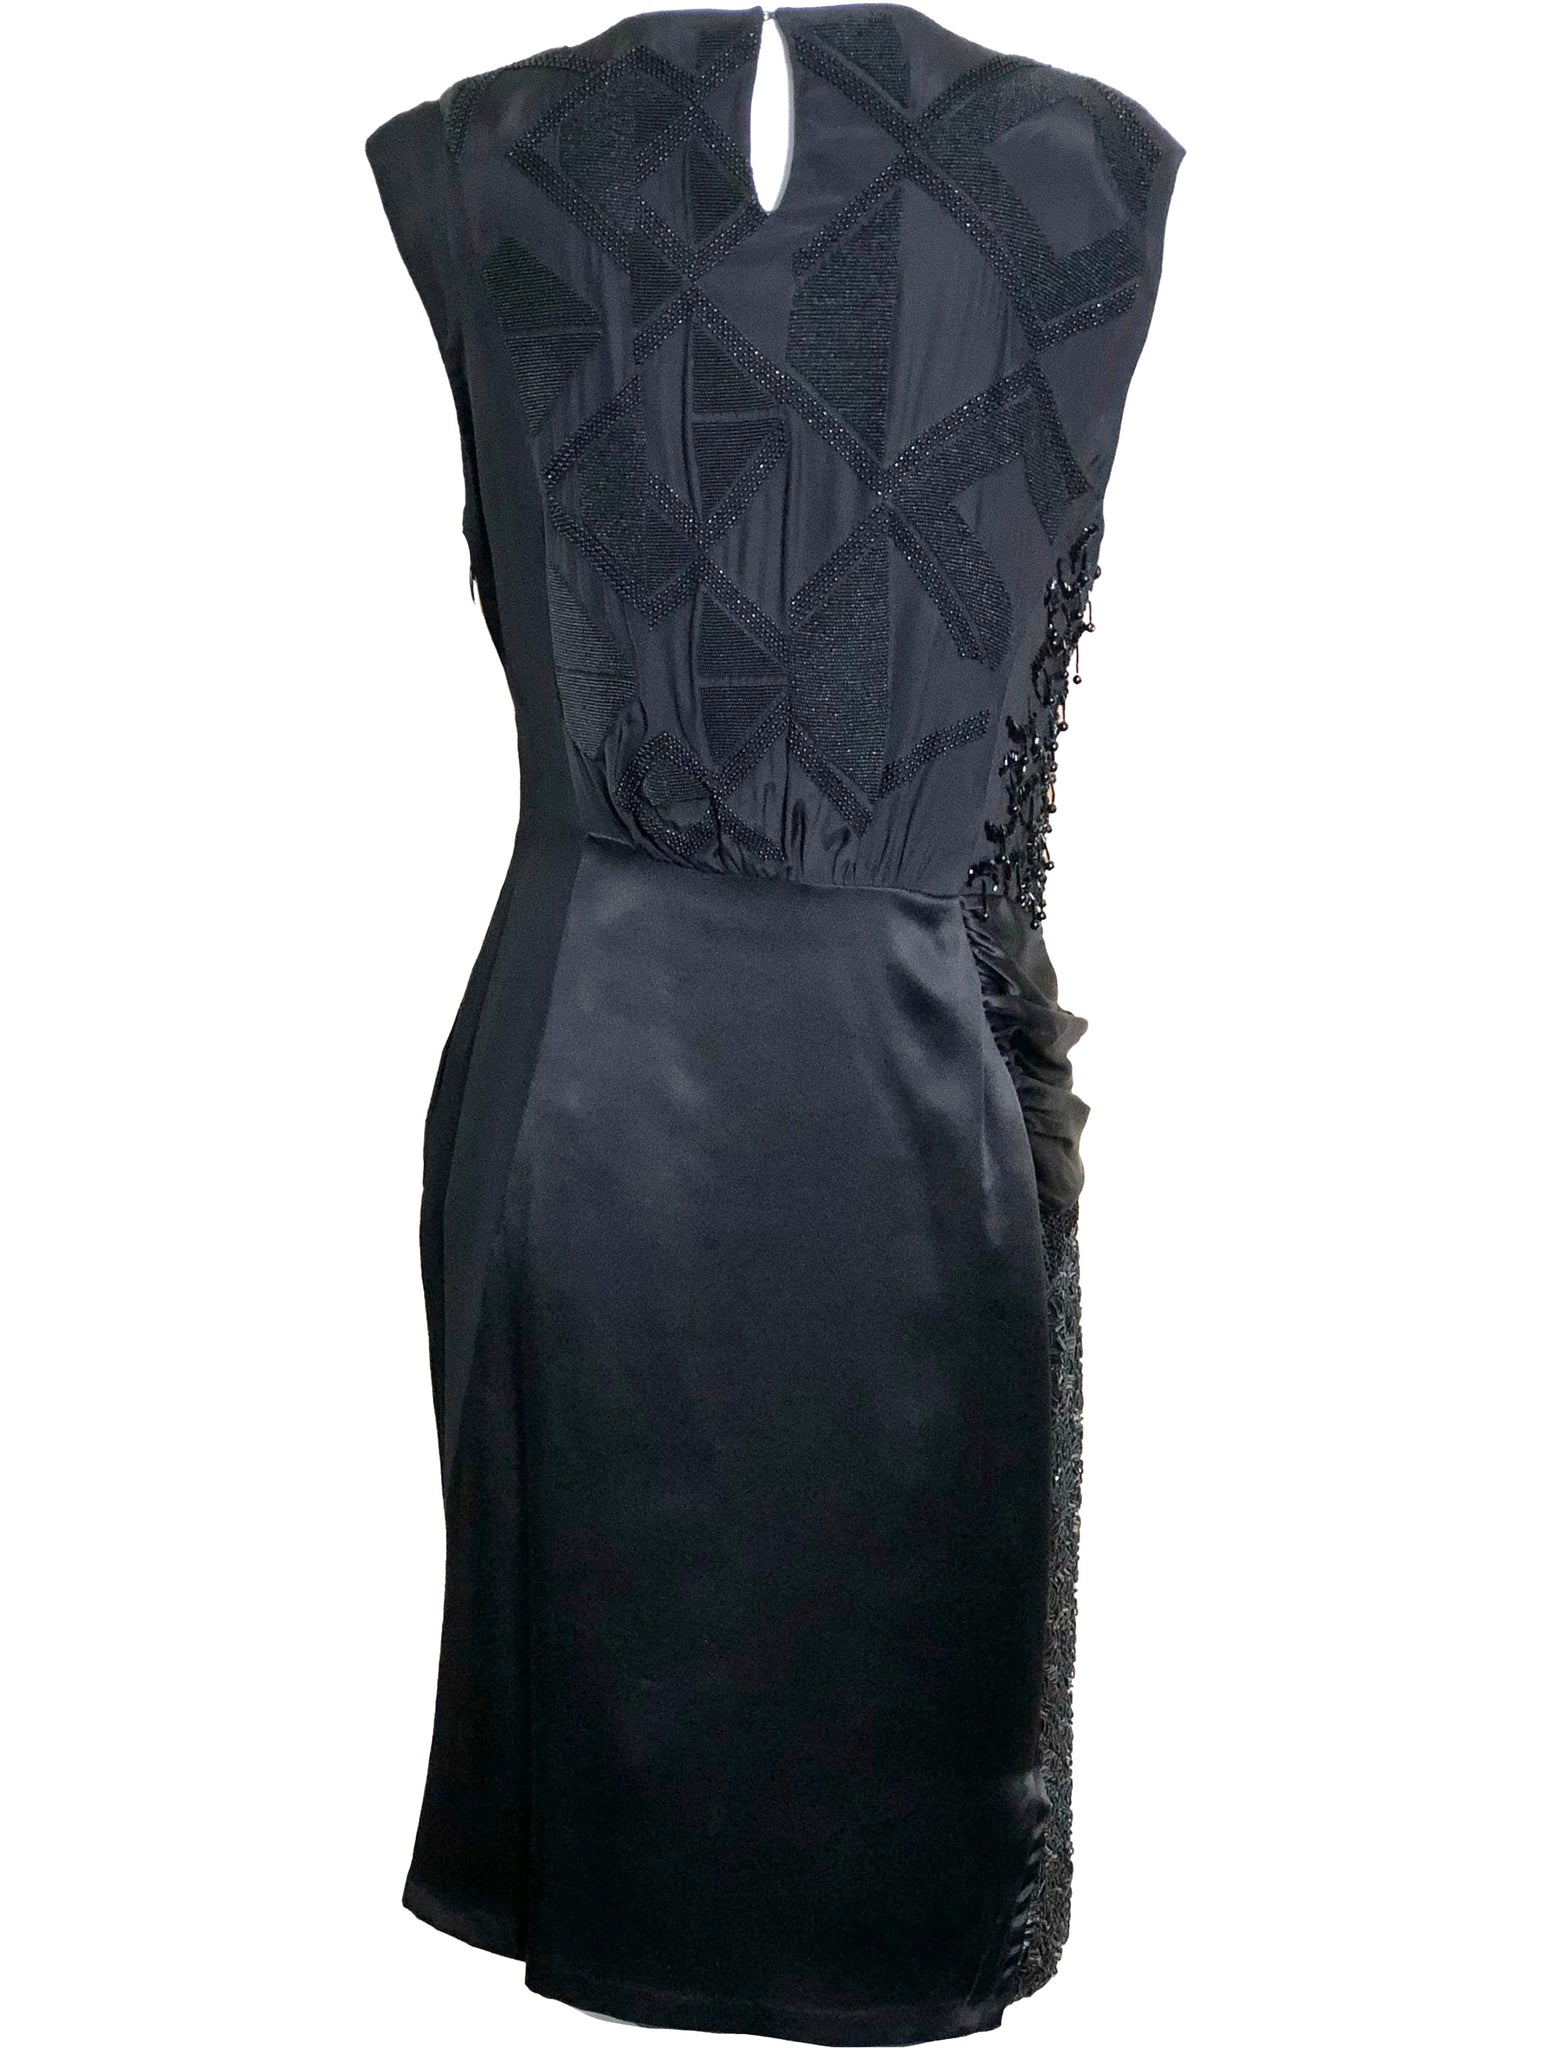 Dries Van Noten Early 2000s Black Silk Beaded Cocktail Dress BACK 3 of 5